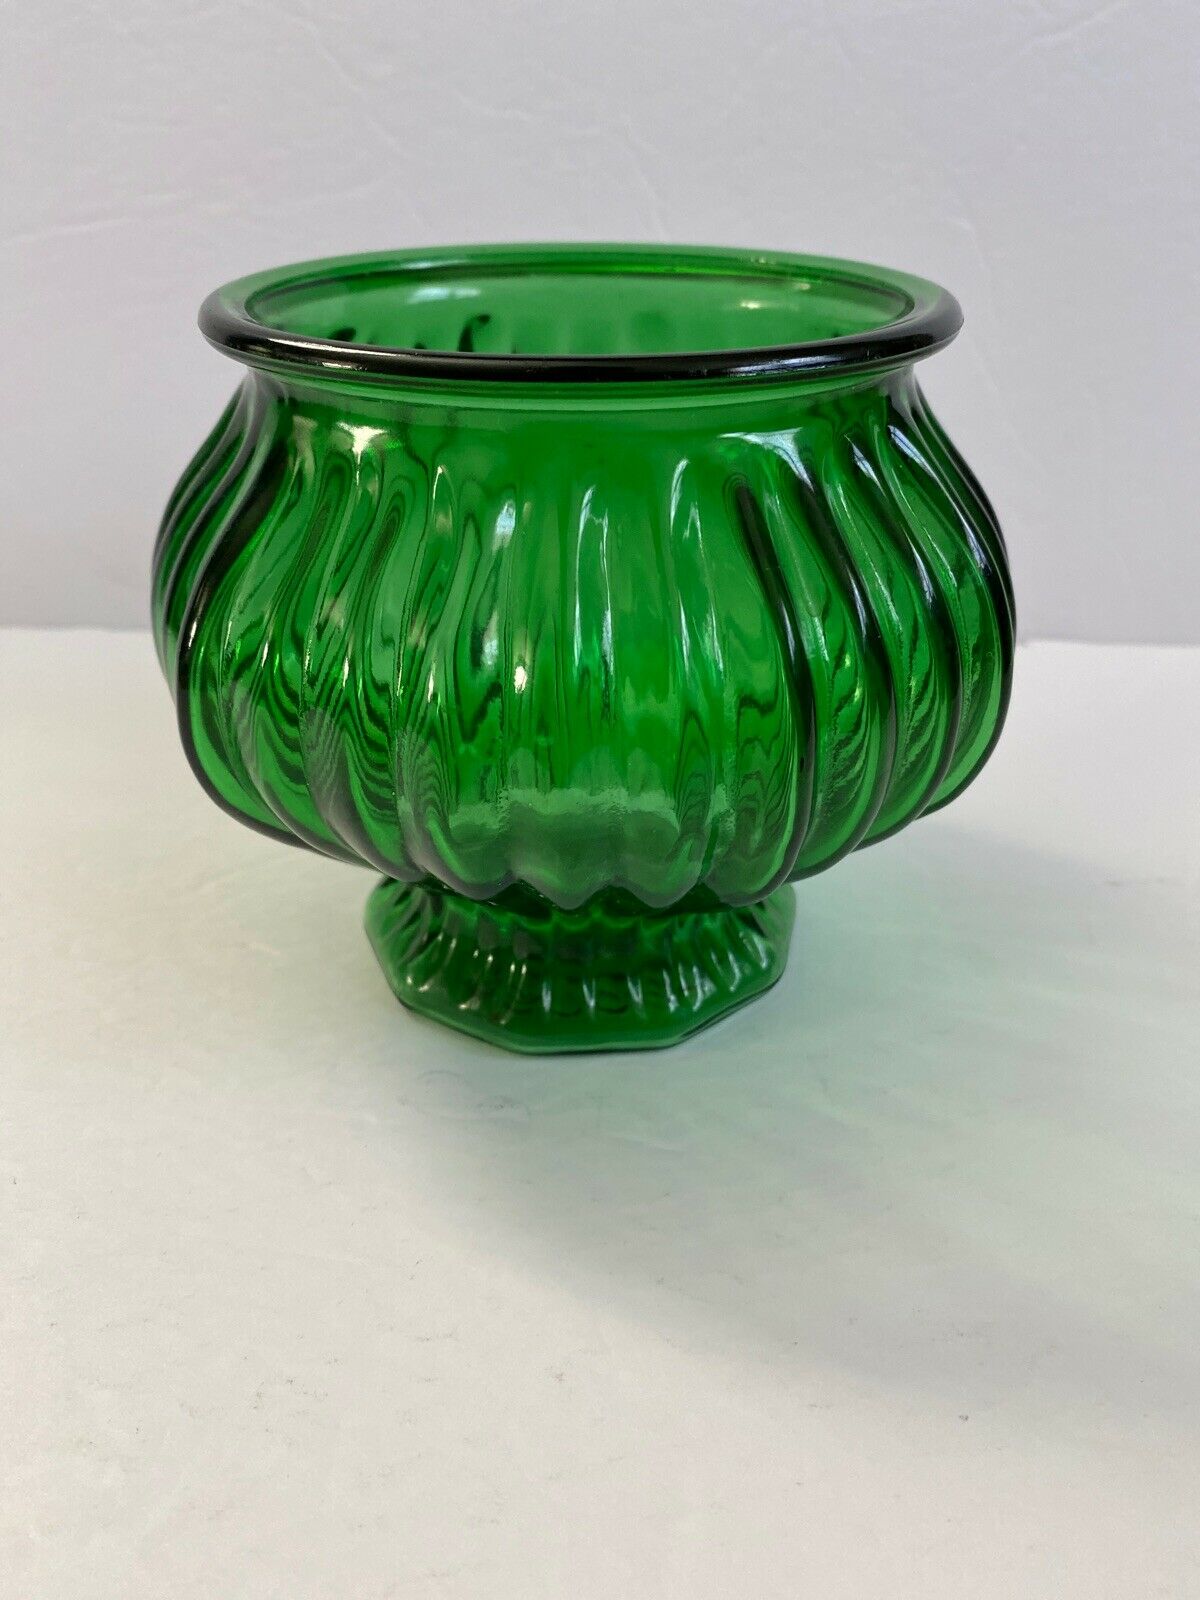 E O Brody Co Emerald Green Glass Pedestal Planter Vase Candy Dish